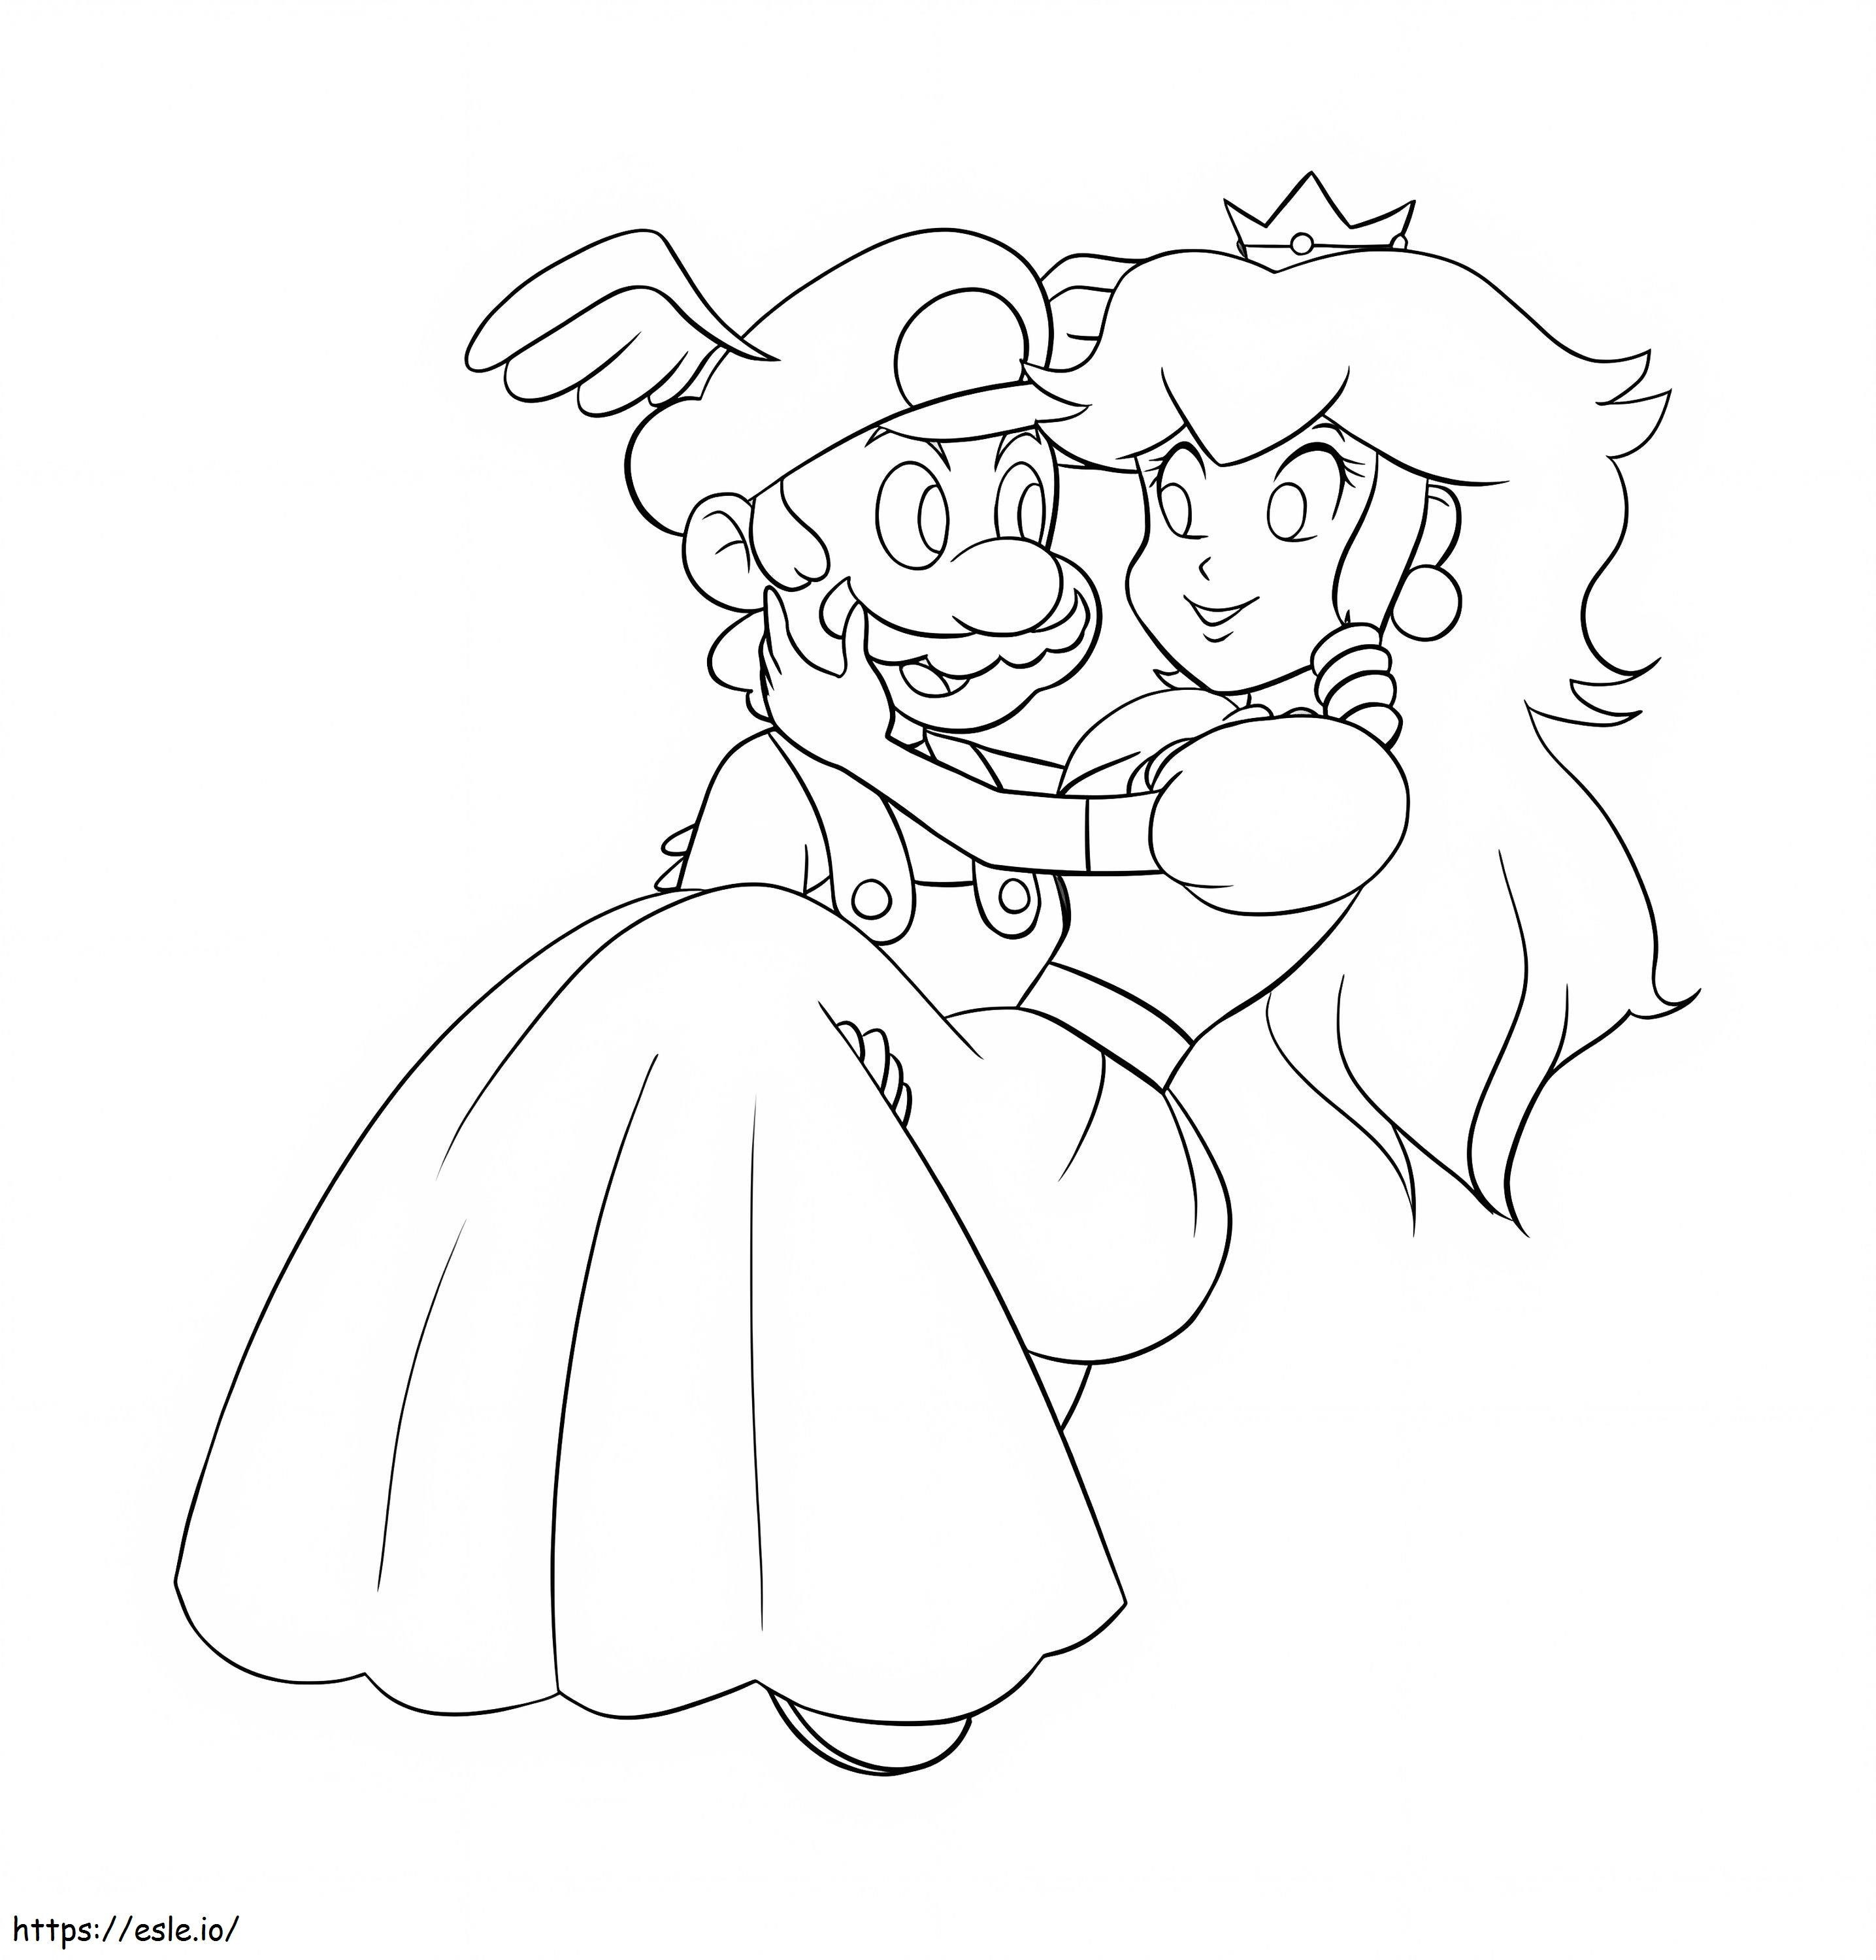 Mario carregando a princesa Peach para colorir